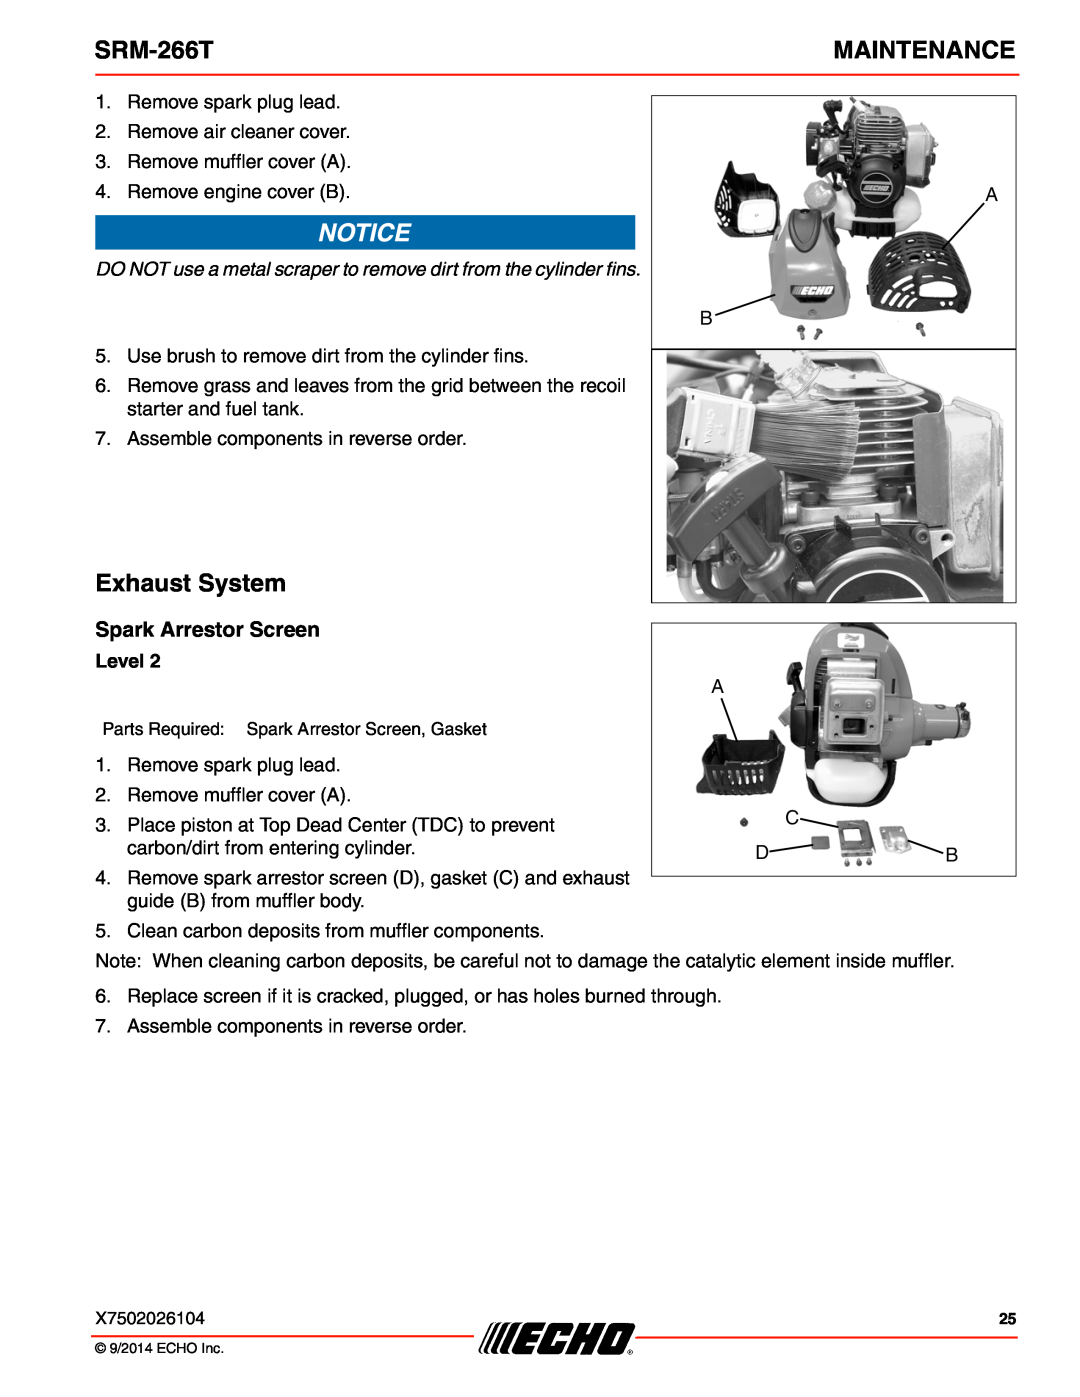 Echo SRM-266T specifications Exhaust System, Spark Arrestor Screen, Maintenance 